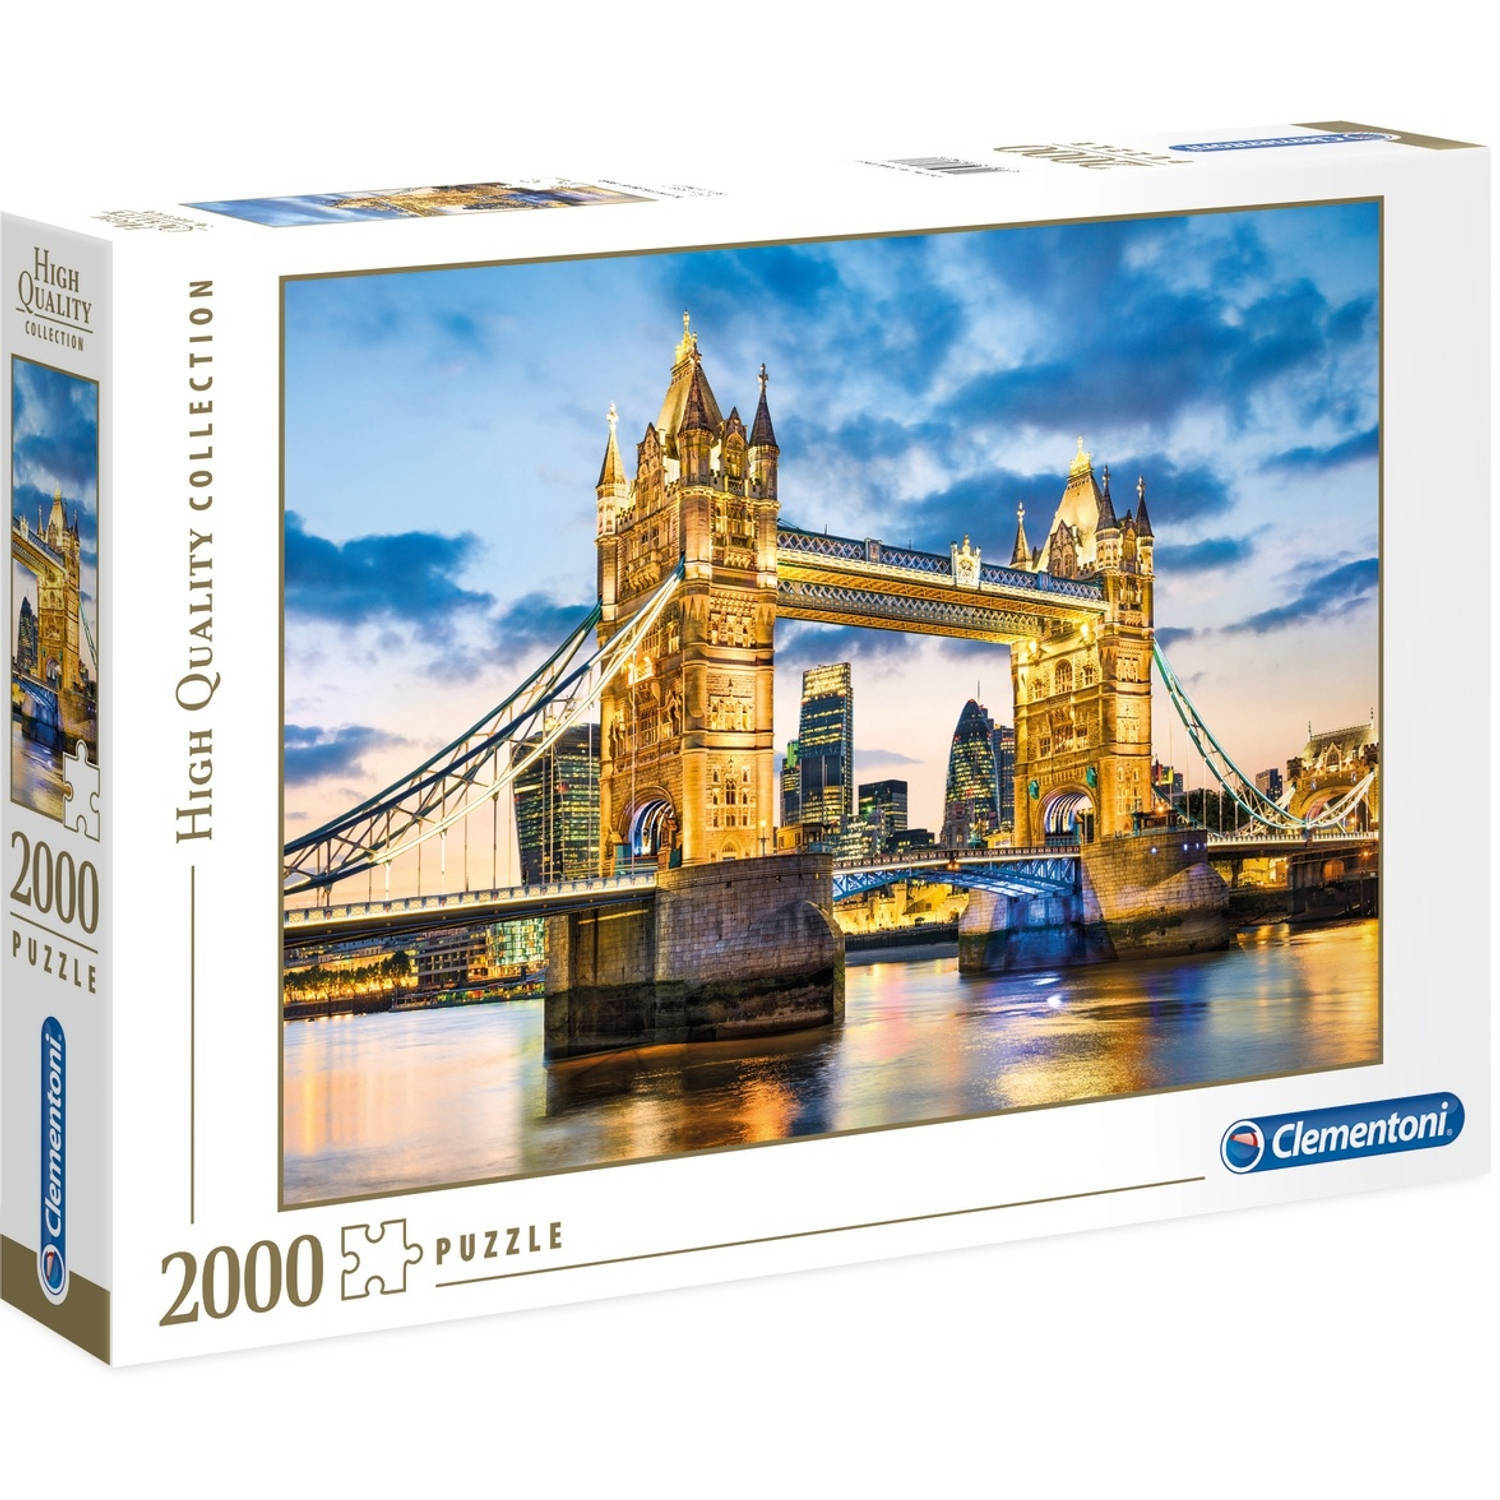 Clementoni legpuzzel Tower Bridge 2000 stukjes